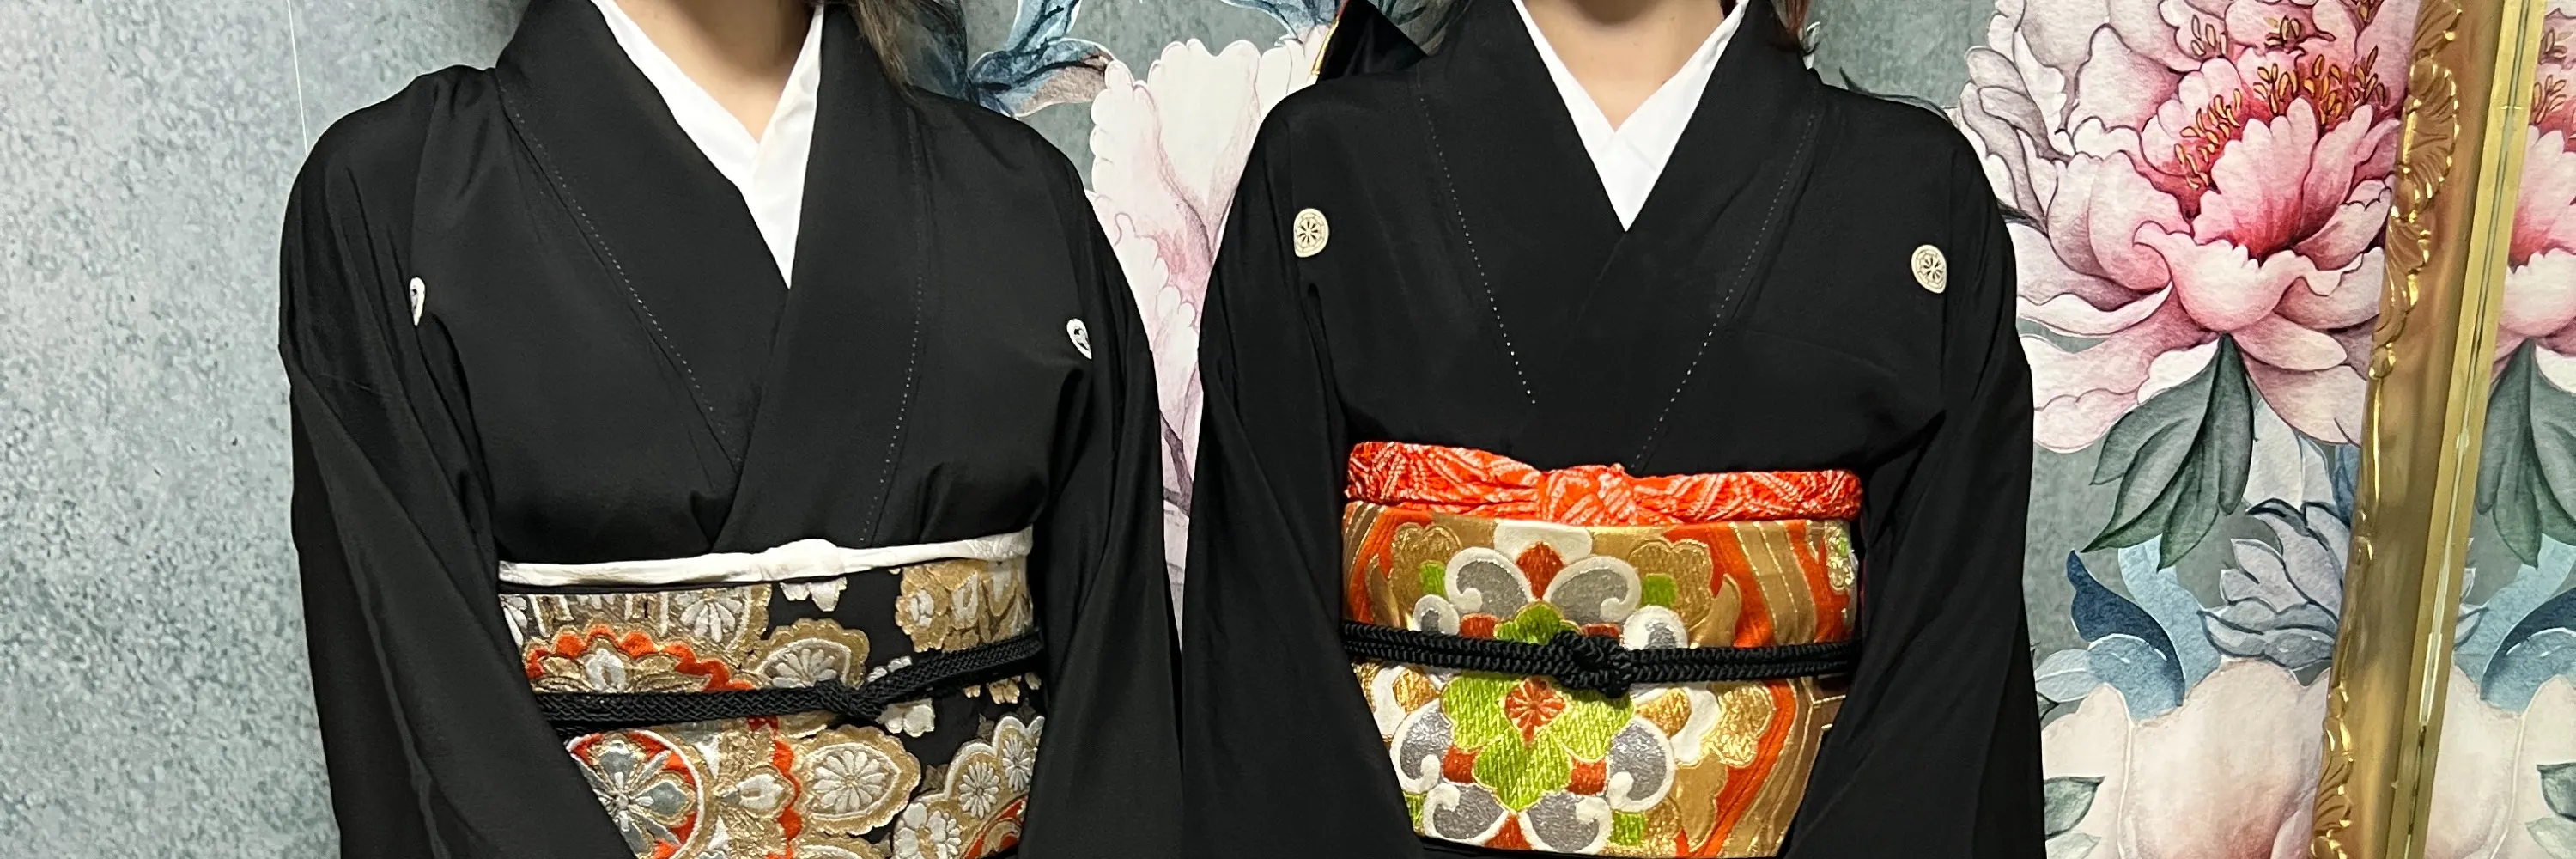 Beyond the fashion, Kimono